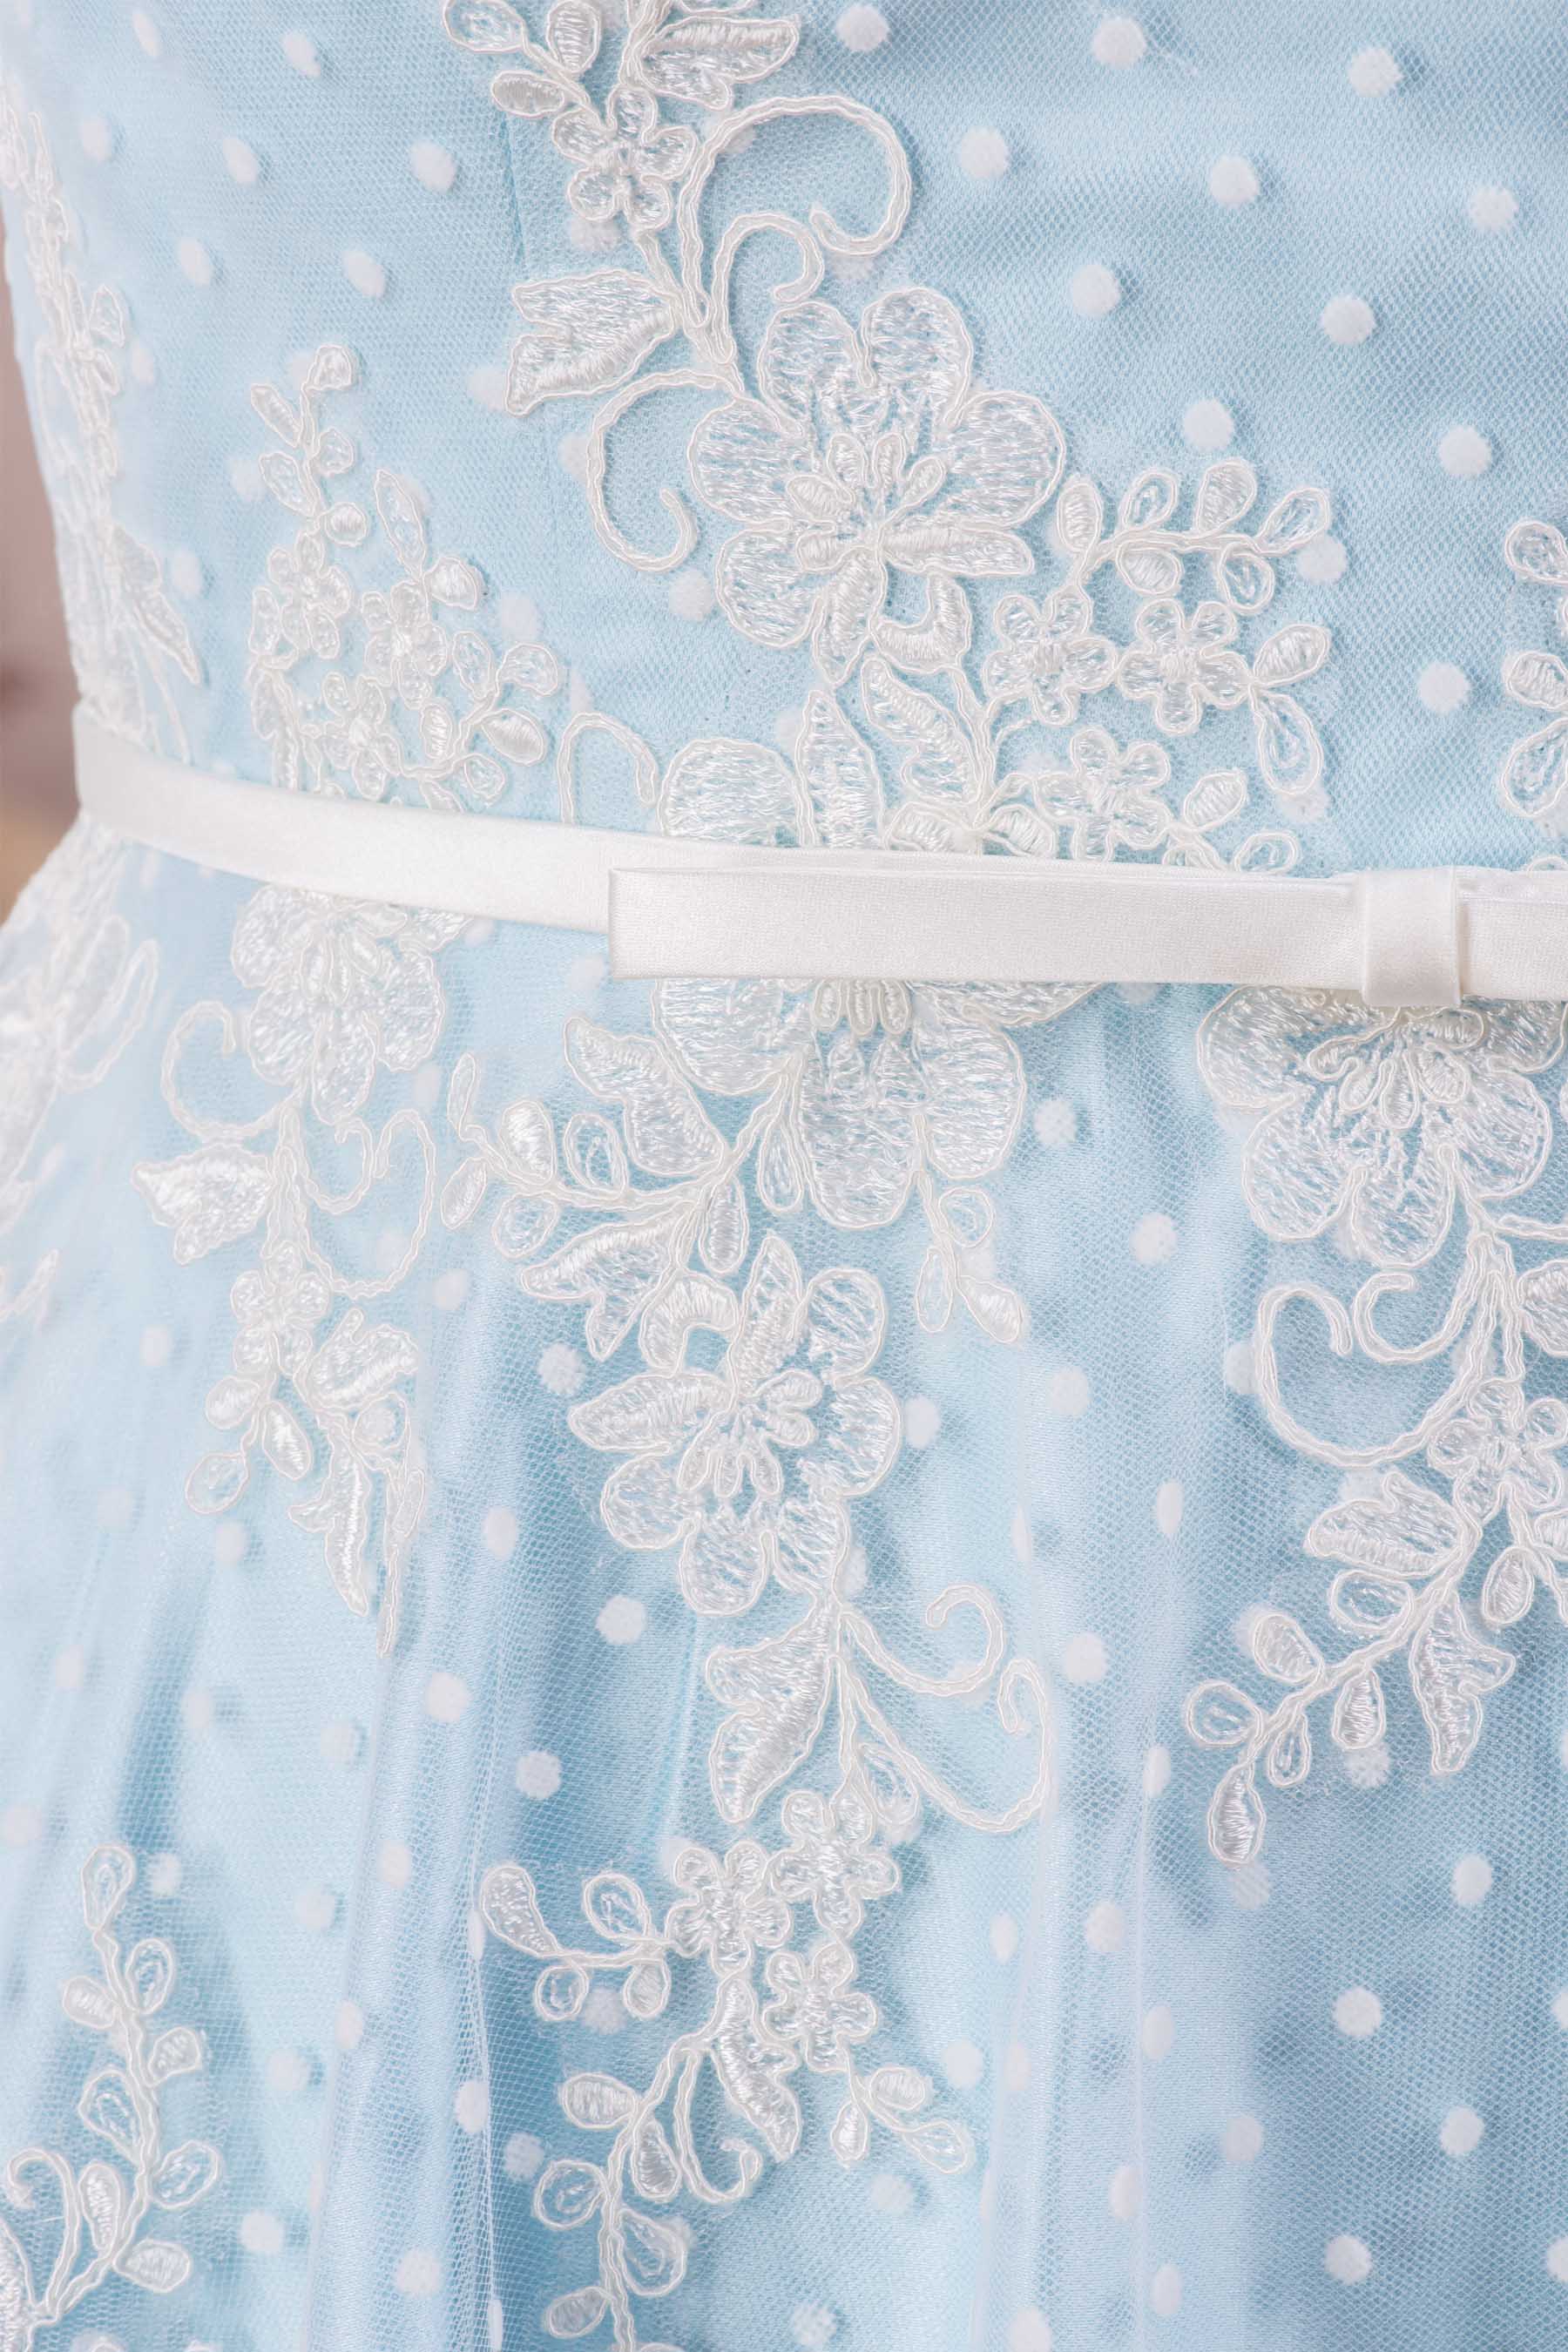 flower lace wedding dress with belt